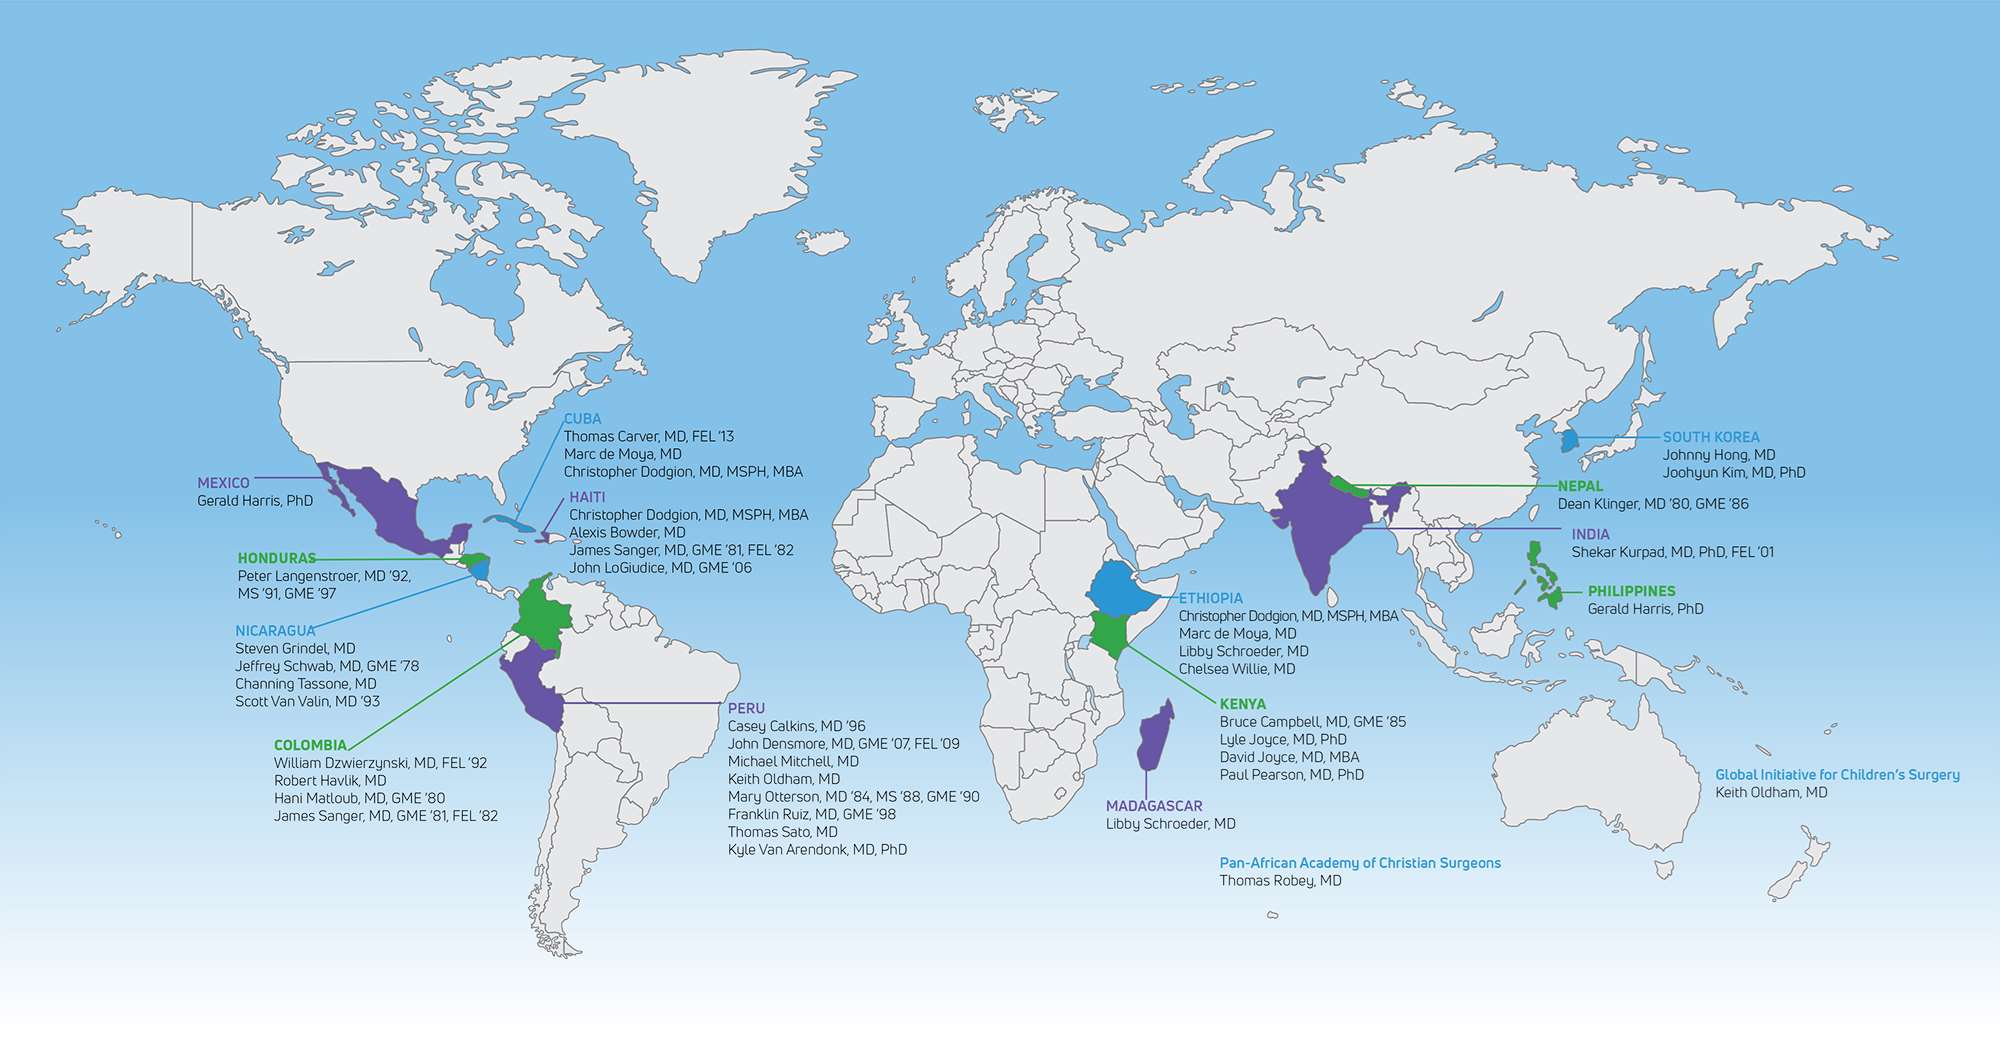 Advancing surgery across the globe